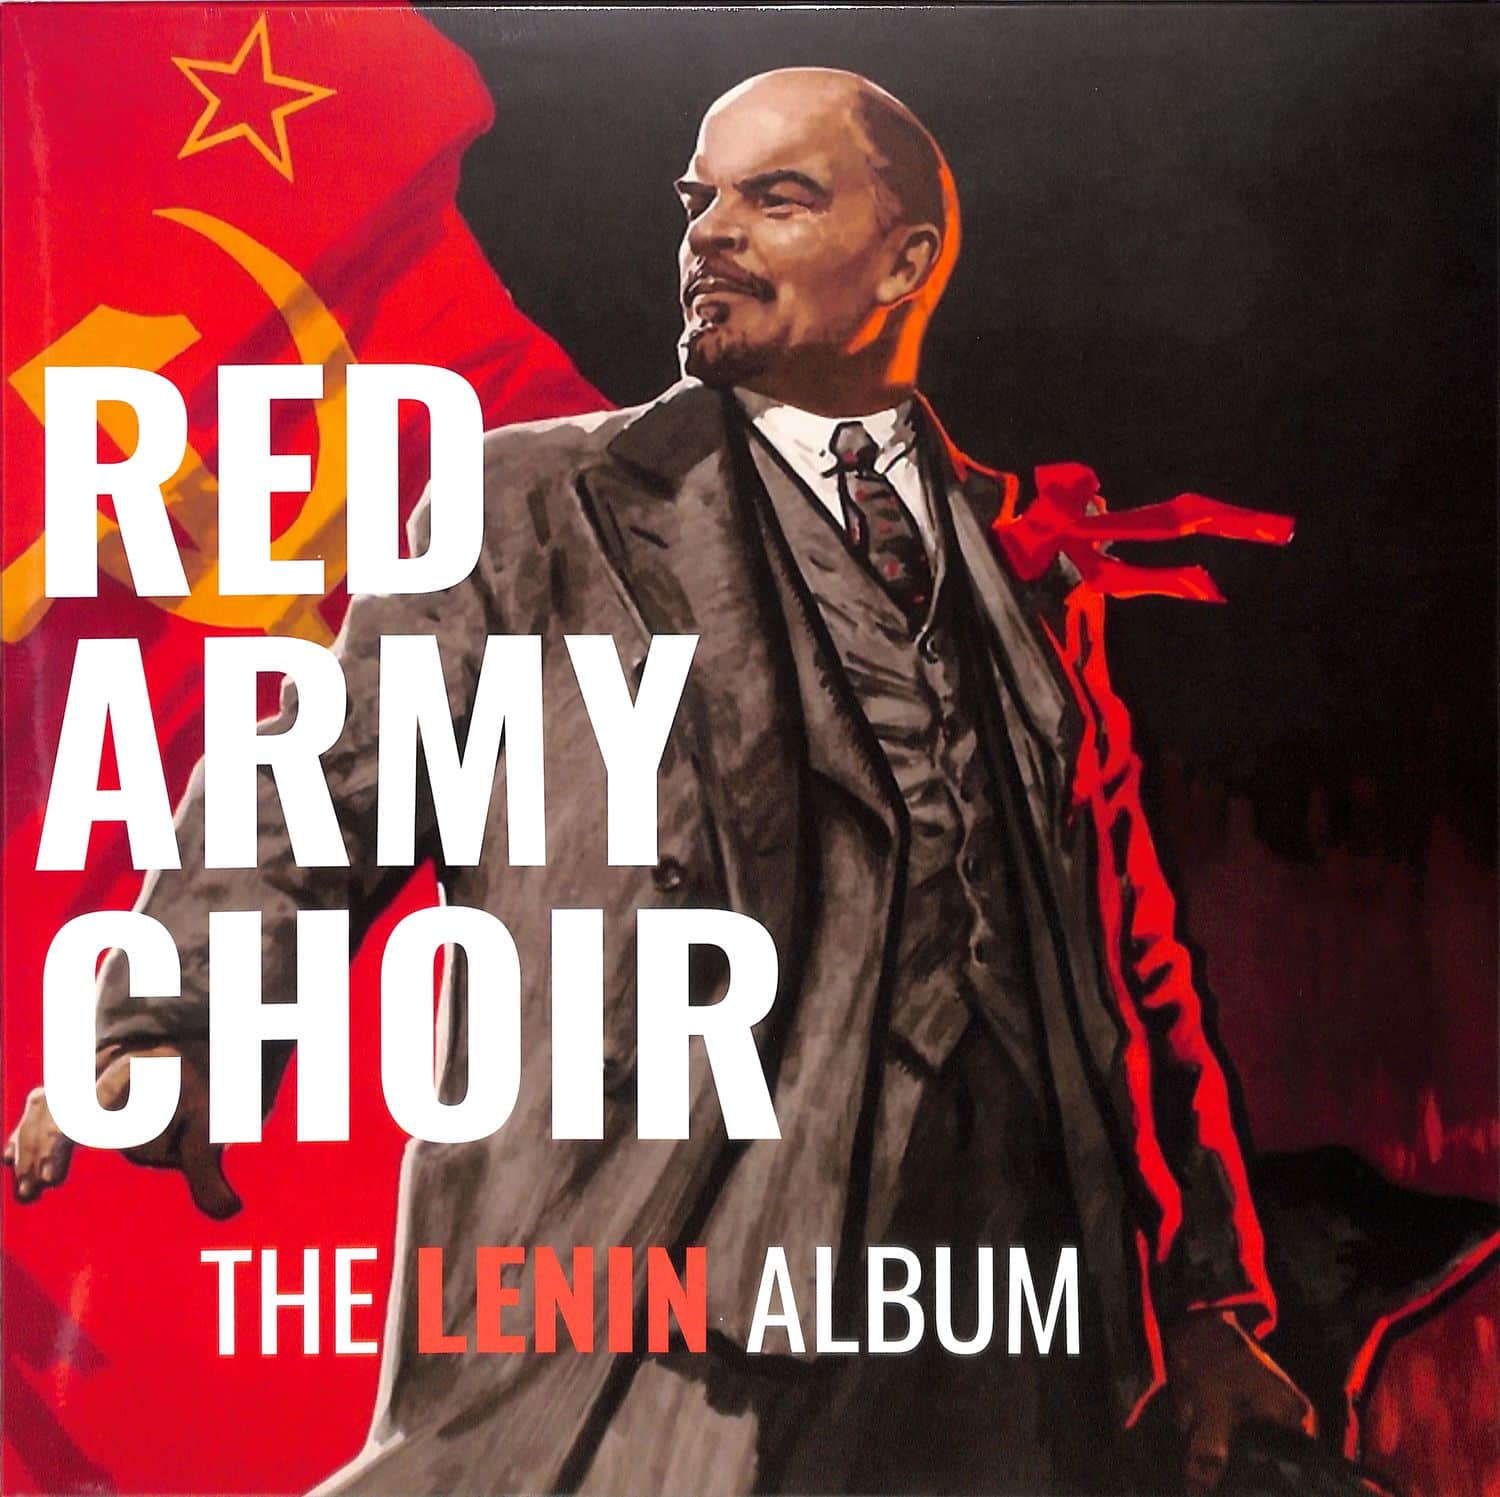 Red Army Choir - THE LENIN ALBUM 